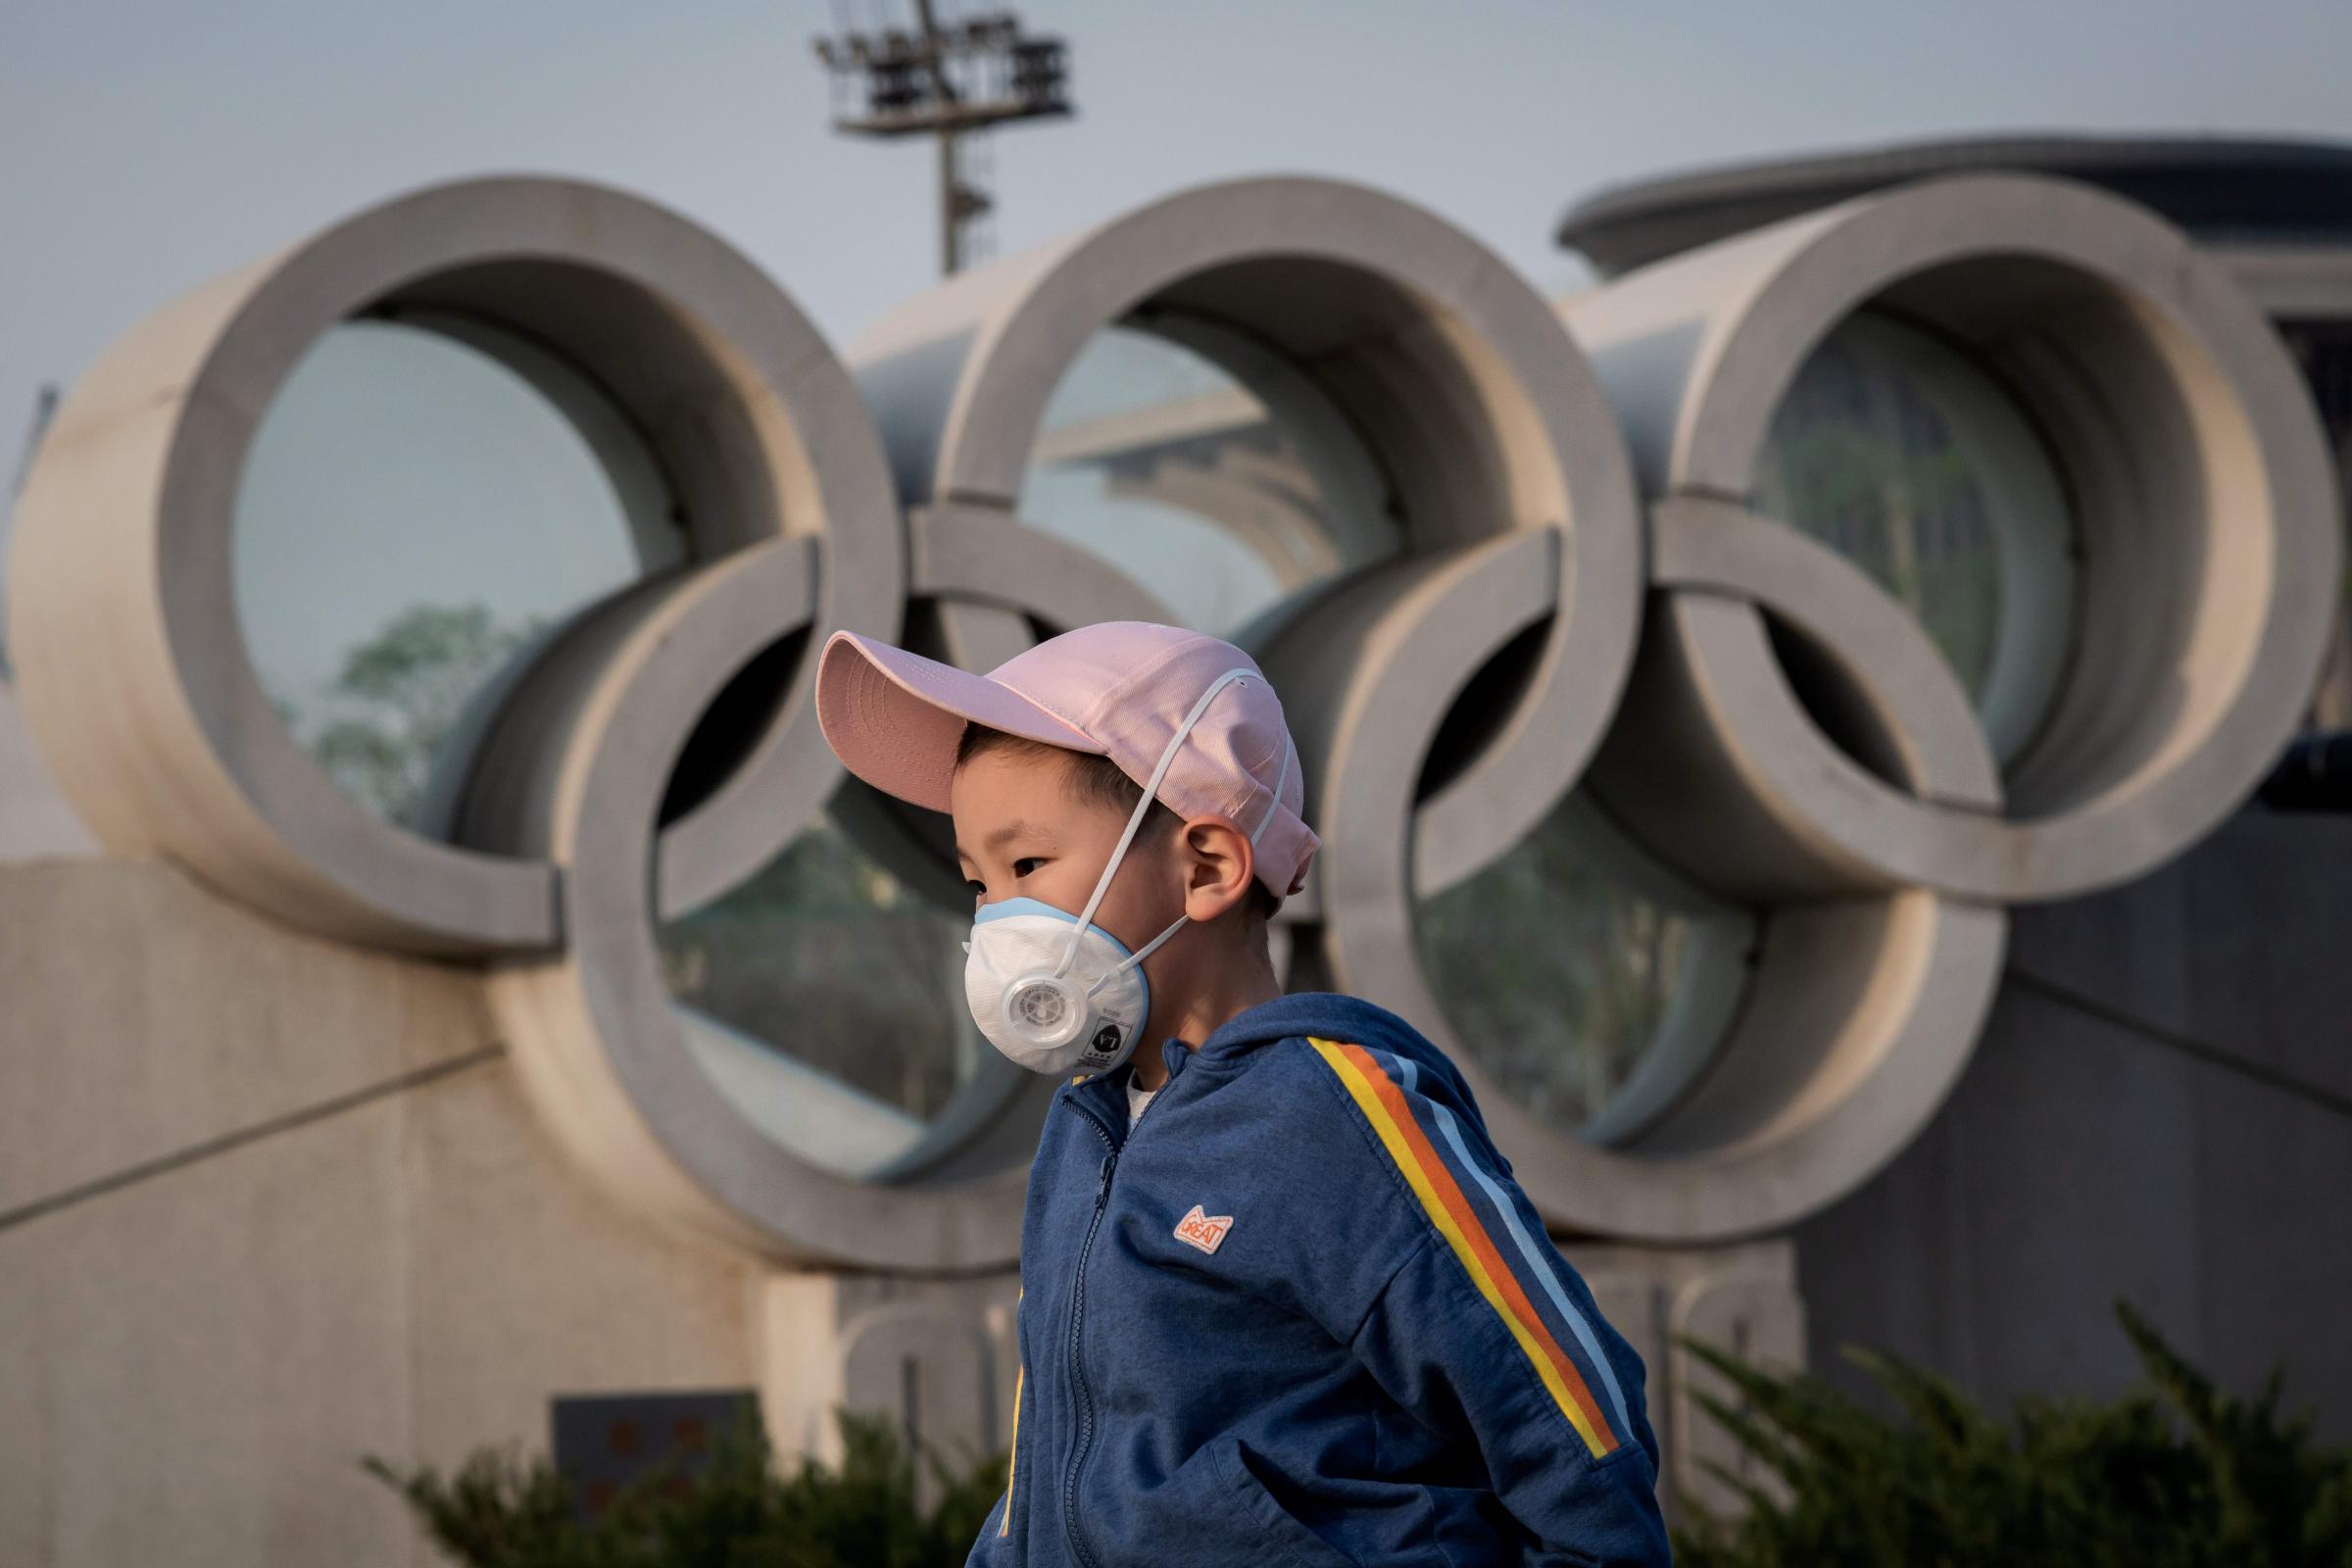 China accuses US of violating Olympic spirit through diplomatic boycott